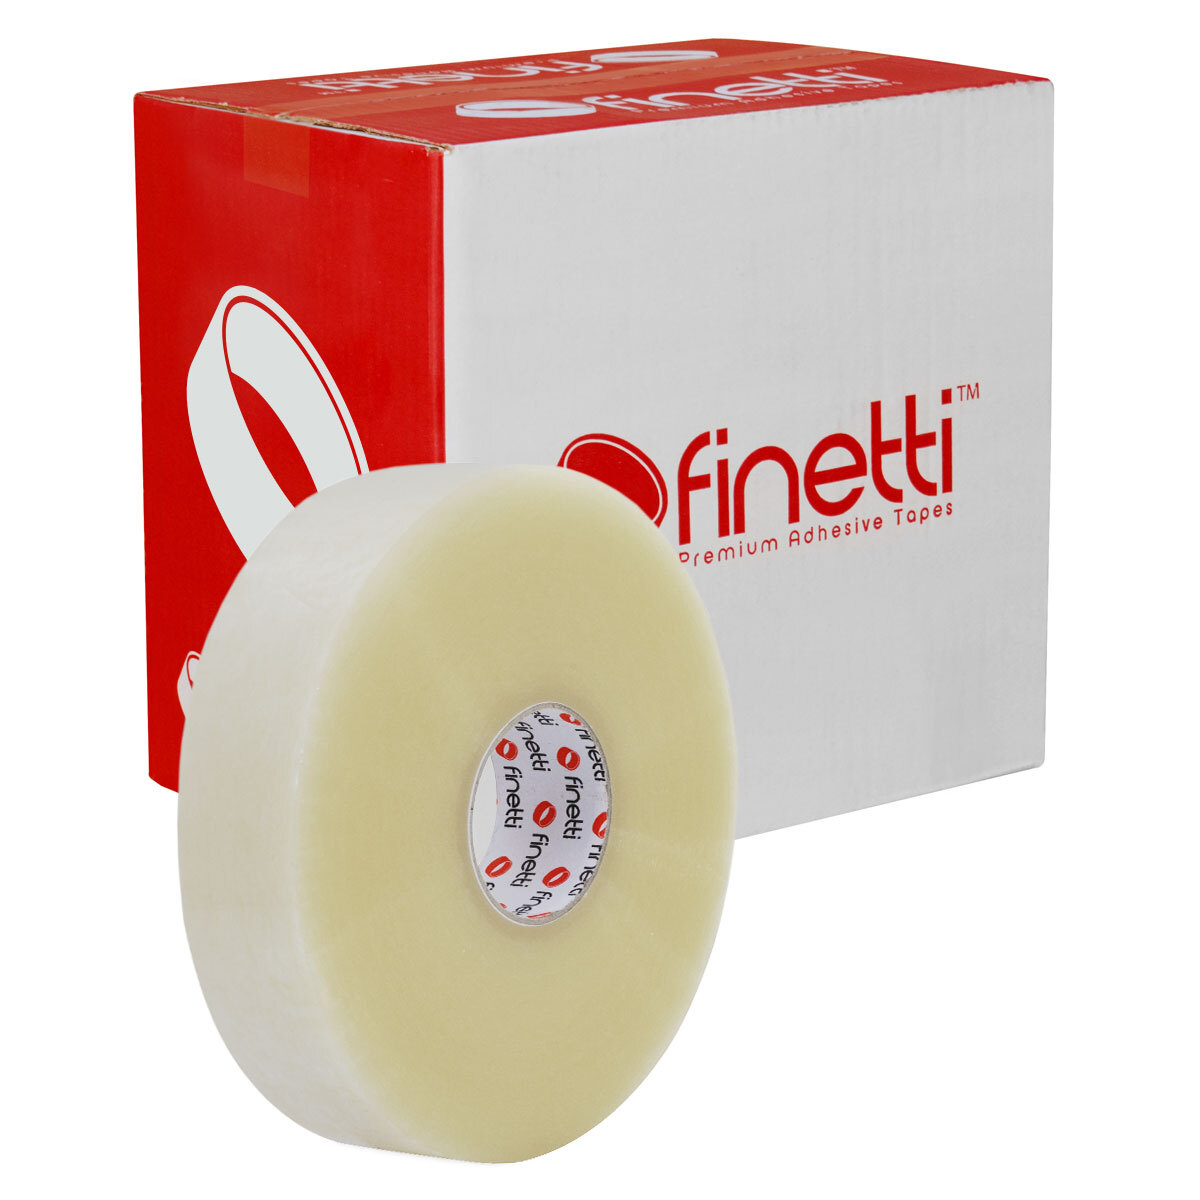 Finetti Acrylic Machine Tape, 48mm x 990m - Clear